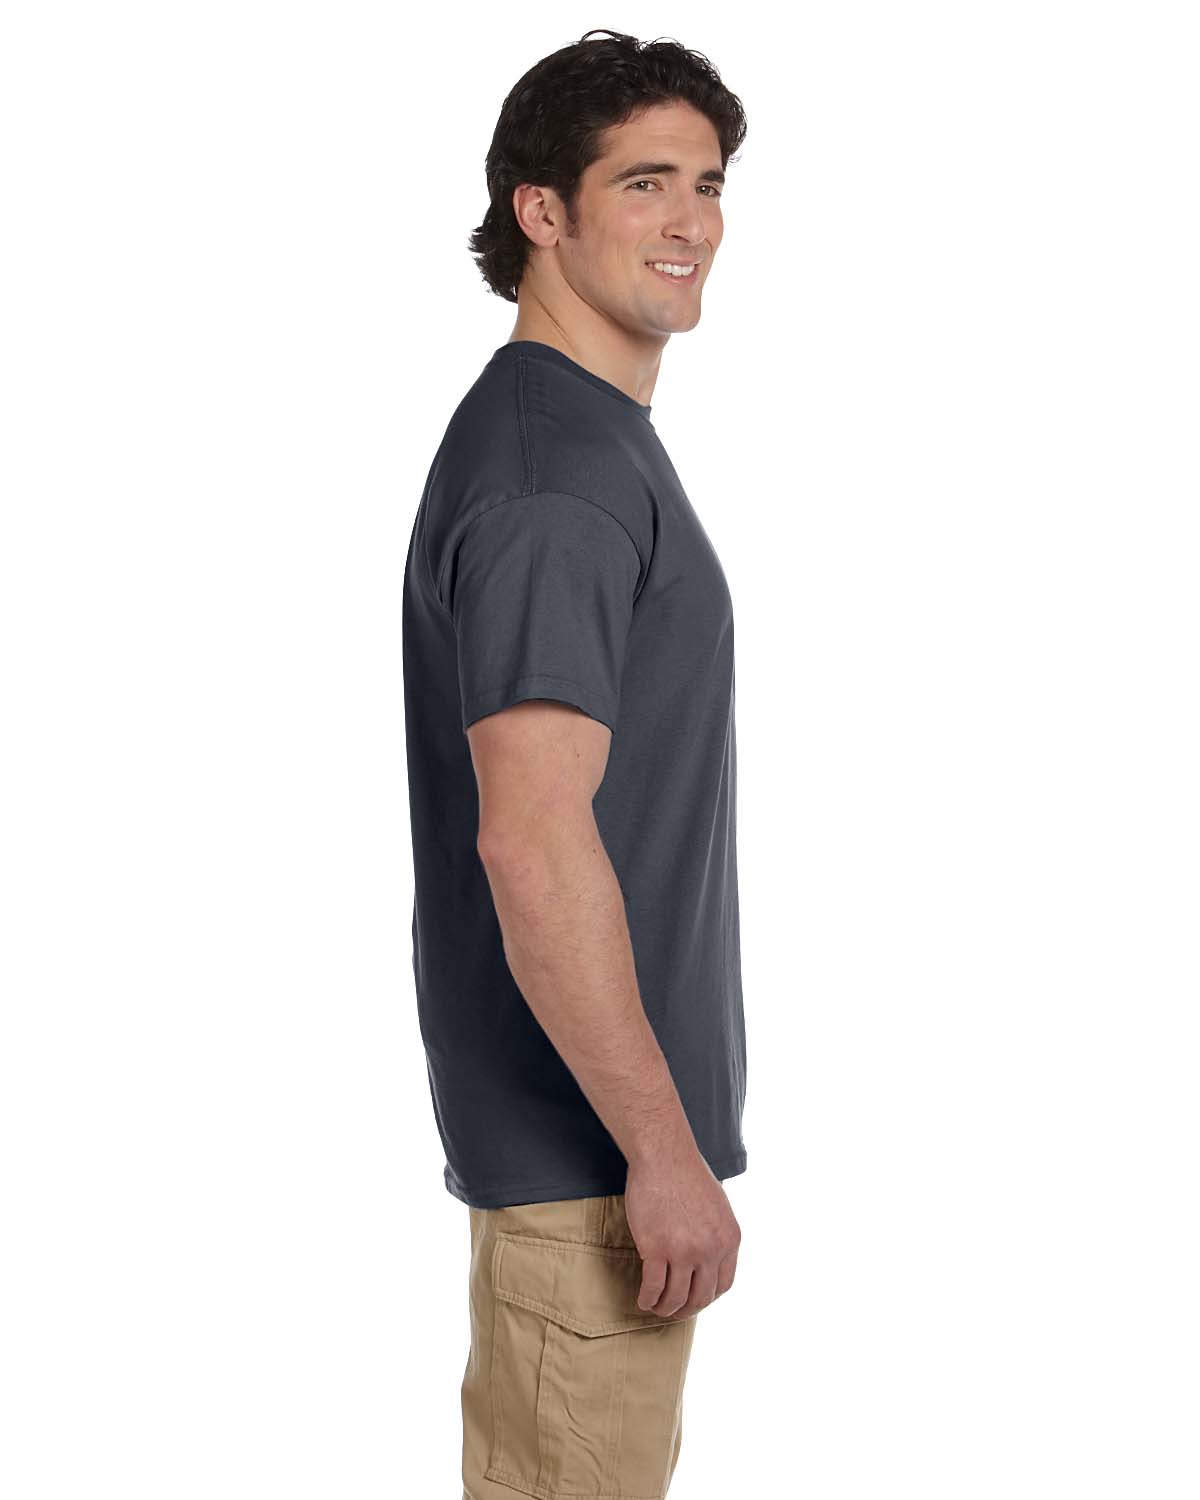 Hanes Mens T-Shirt ComfortBlend 50/50 EcoSmart Crewneck Tee S-4XL